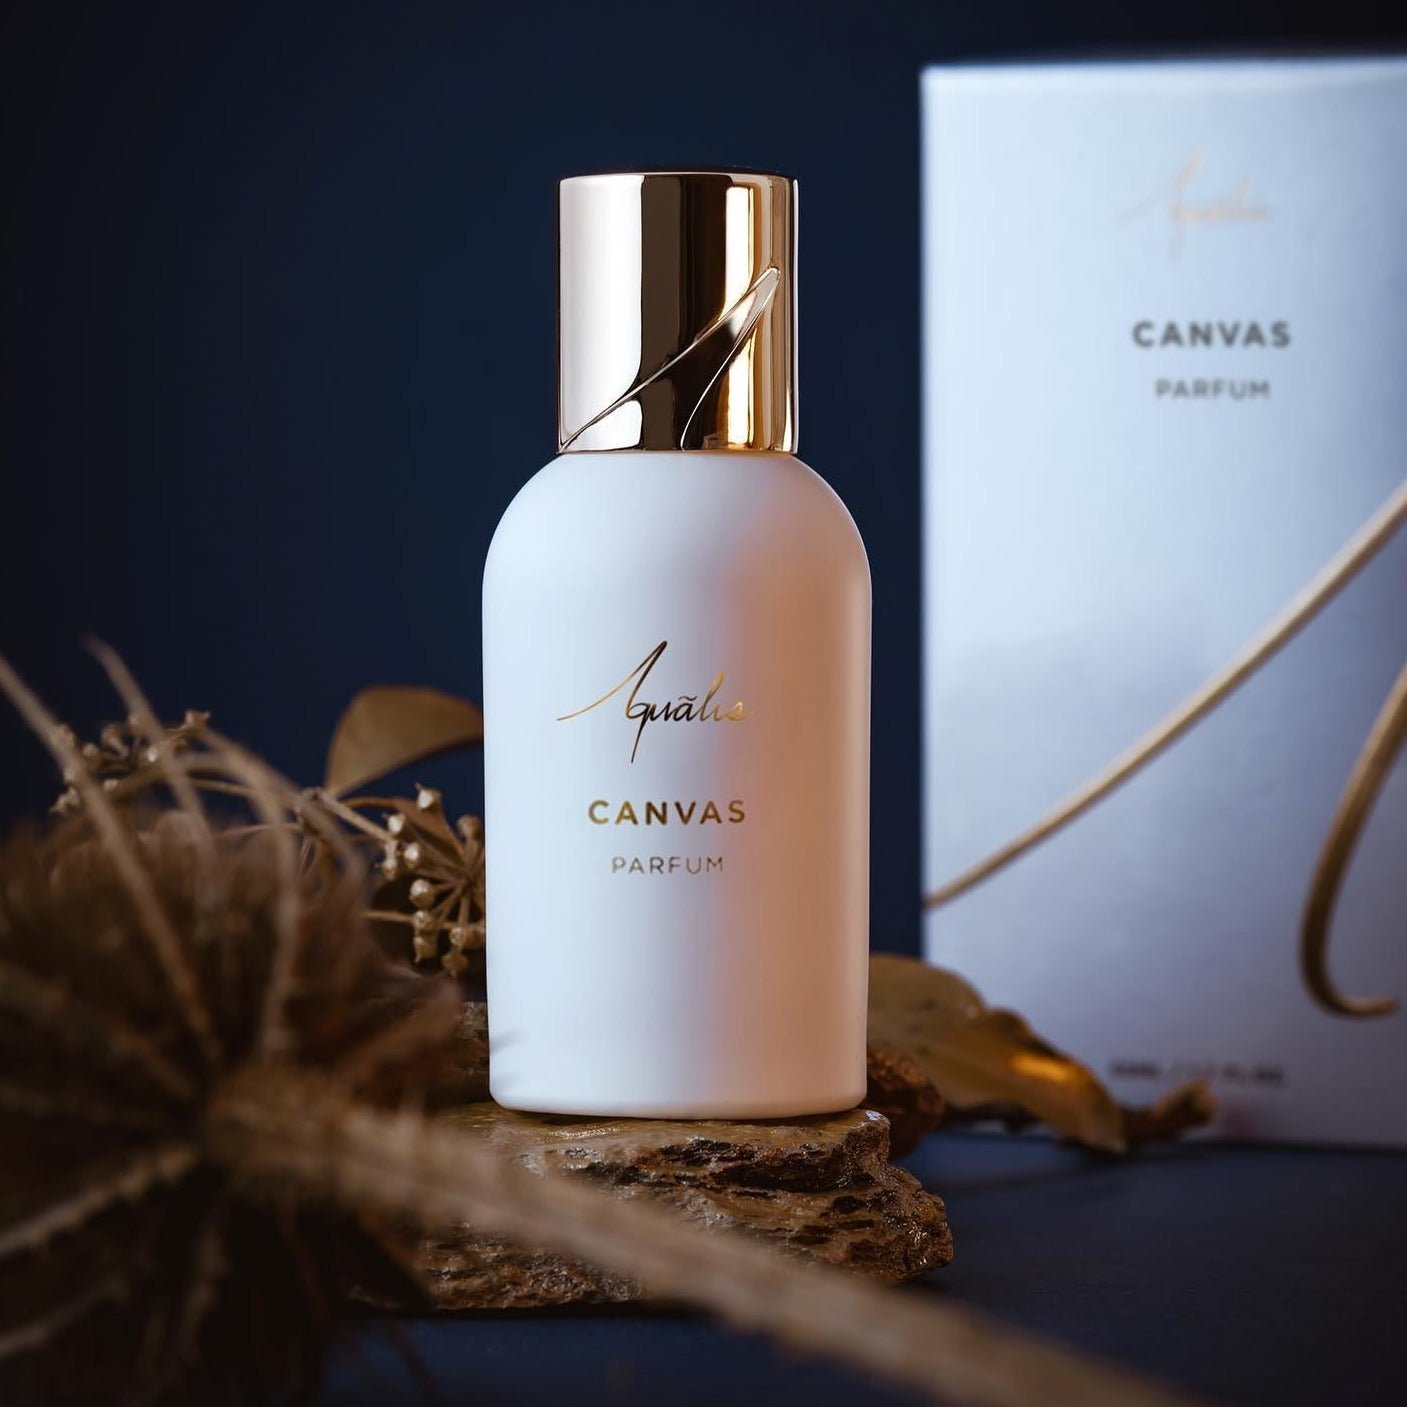 Aqualis Canvas Parfum | My Perfume Shop Australia